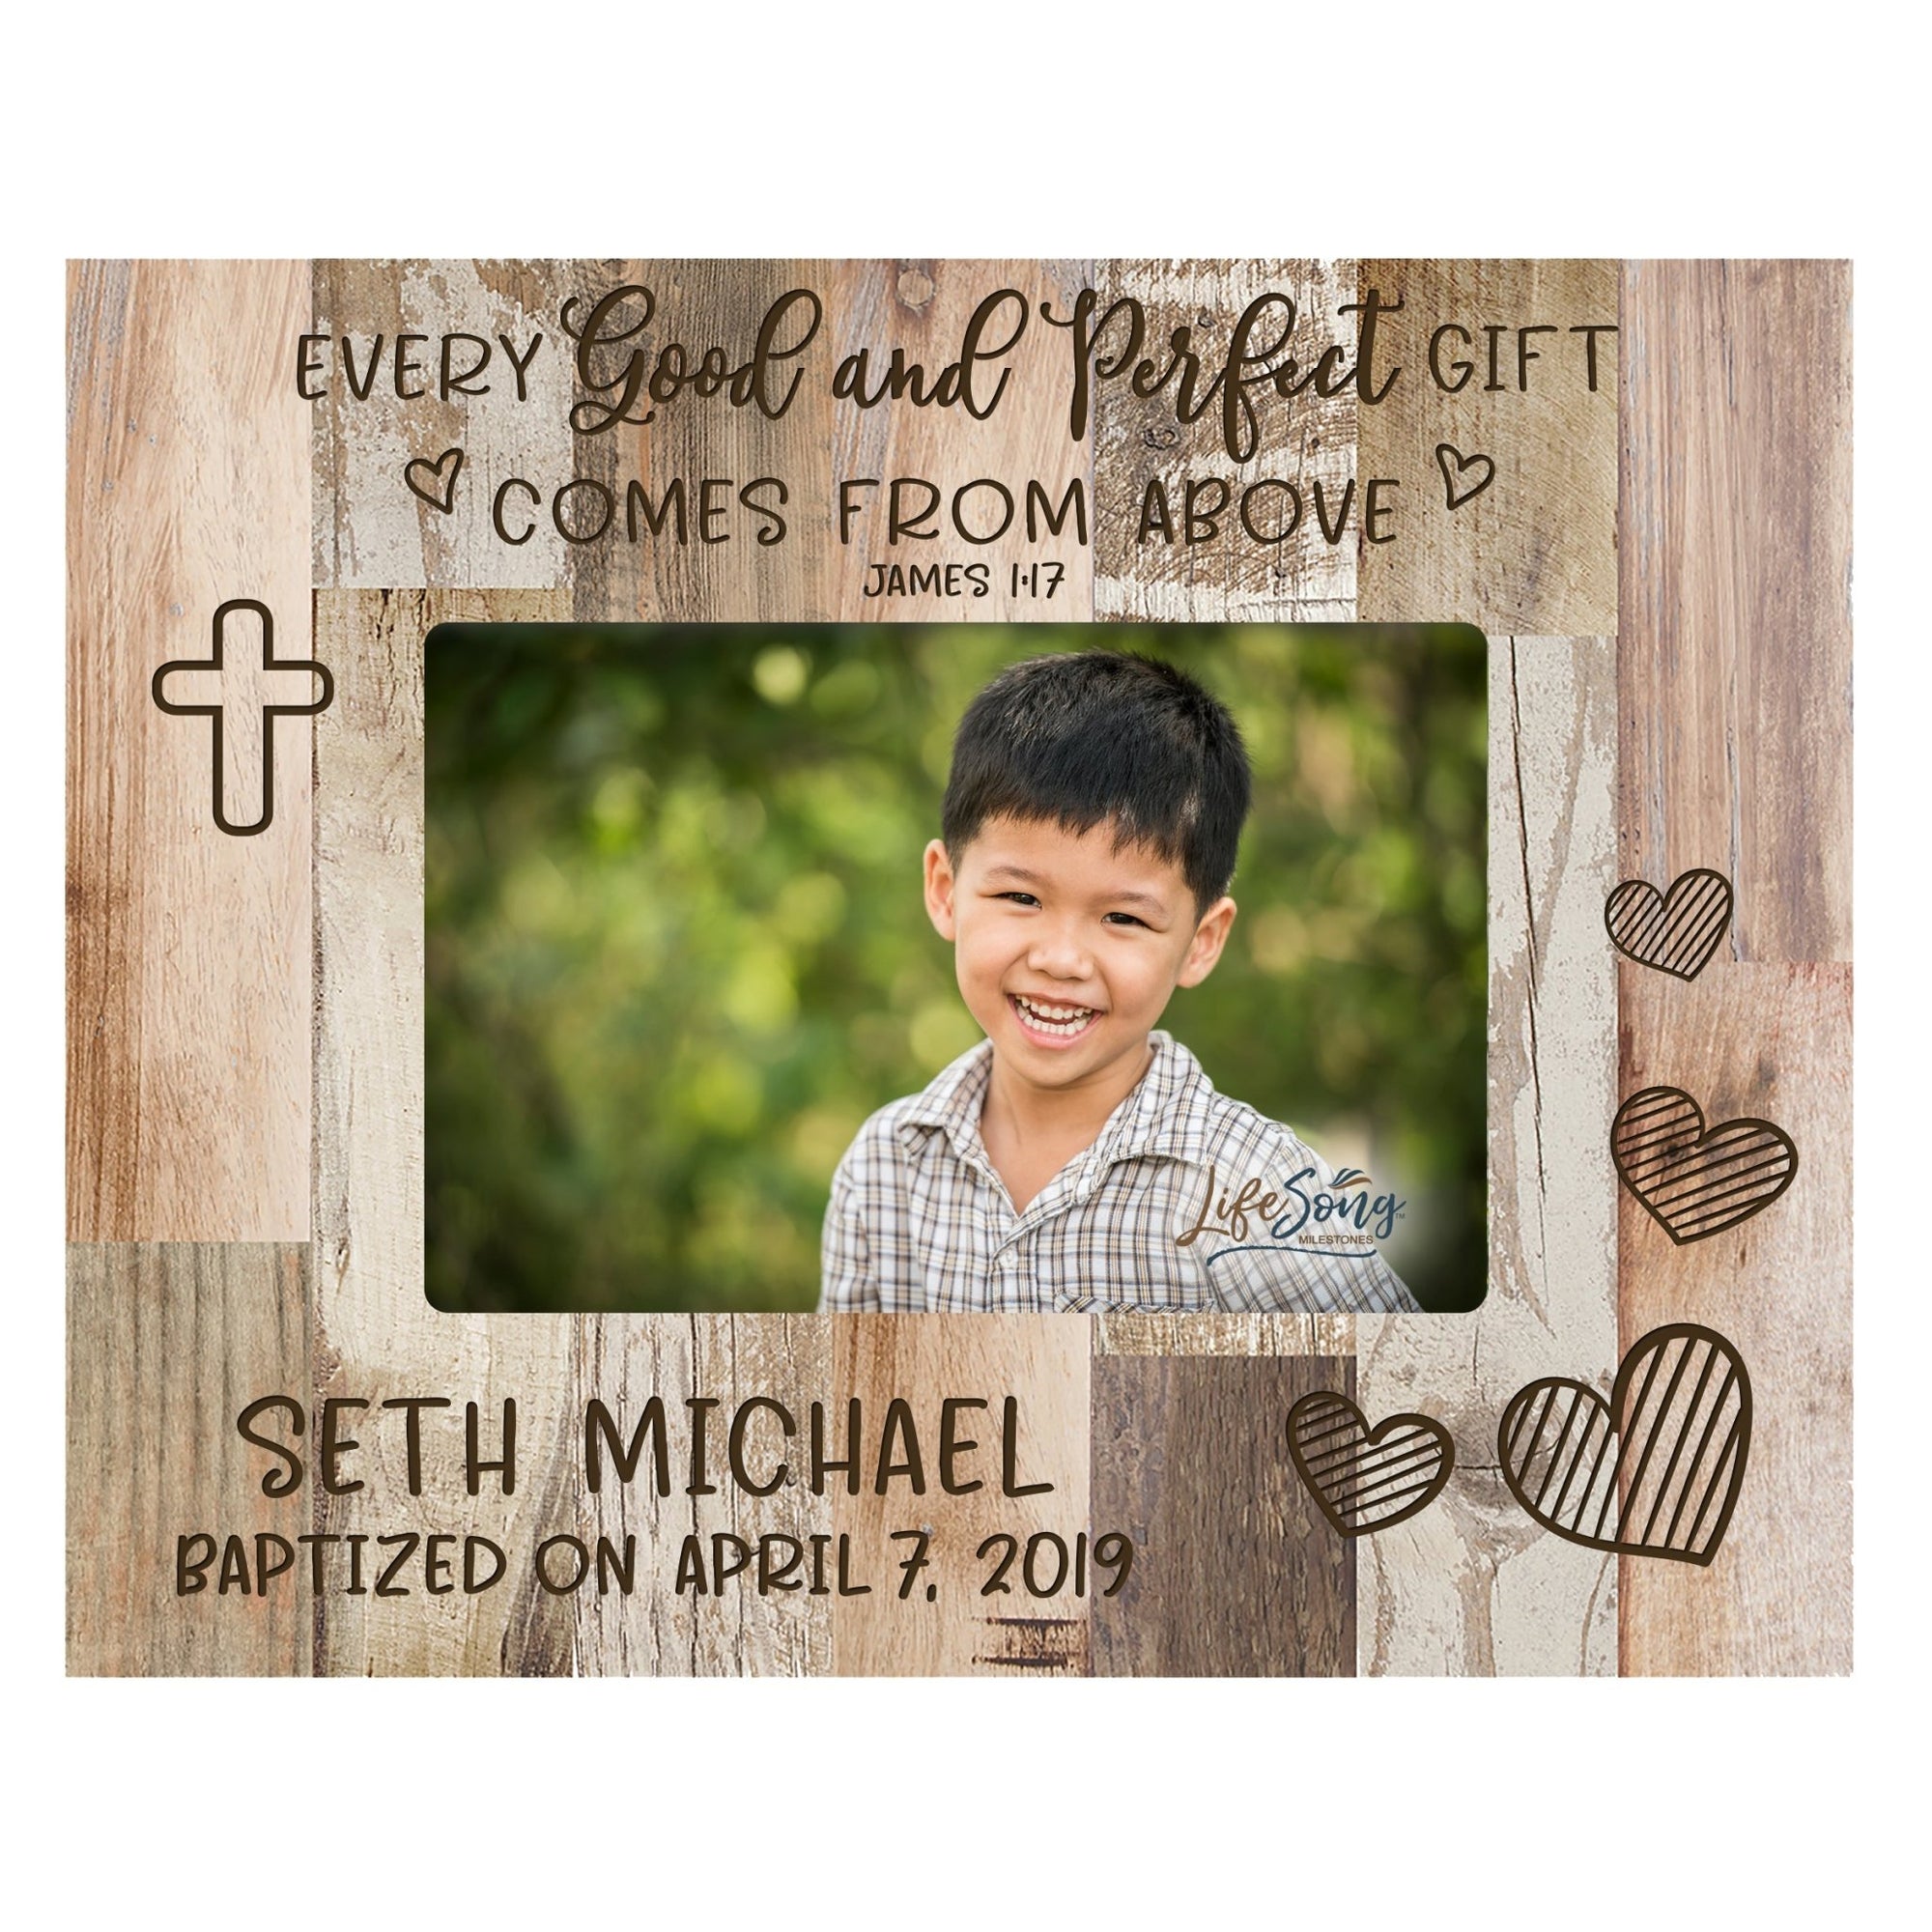 Personalized Baptism Photo Frame - Good & Perfect - LifeSong Milestones